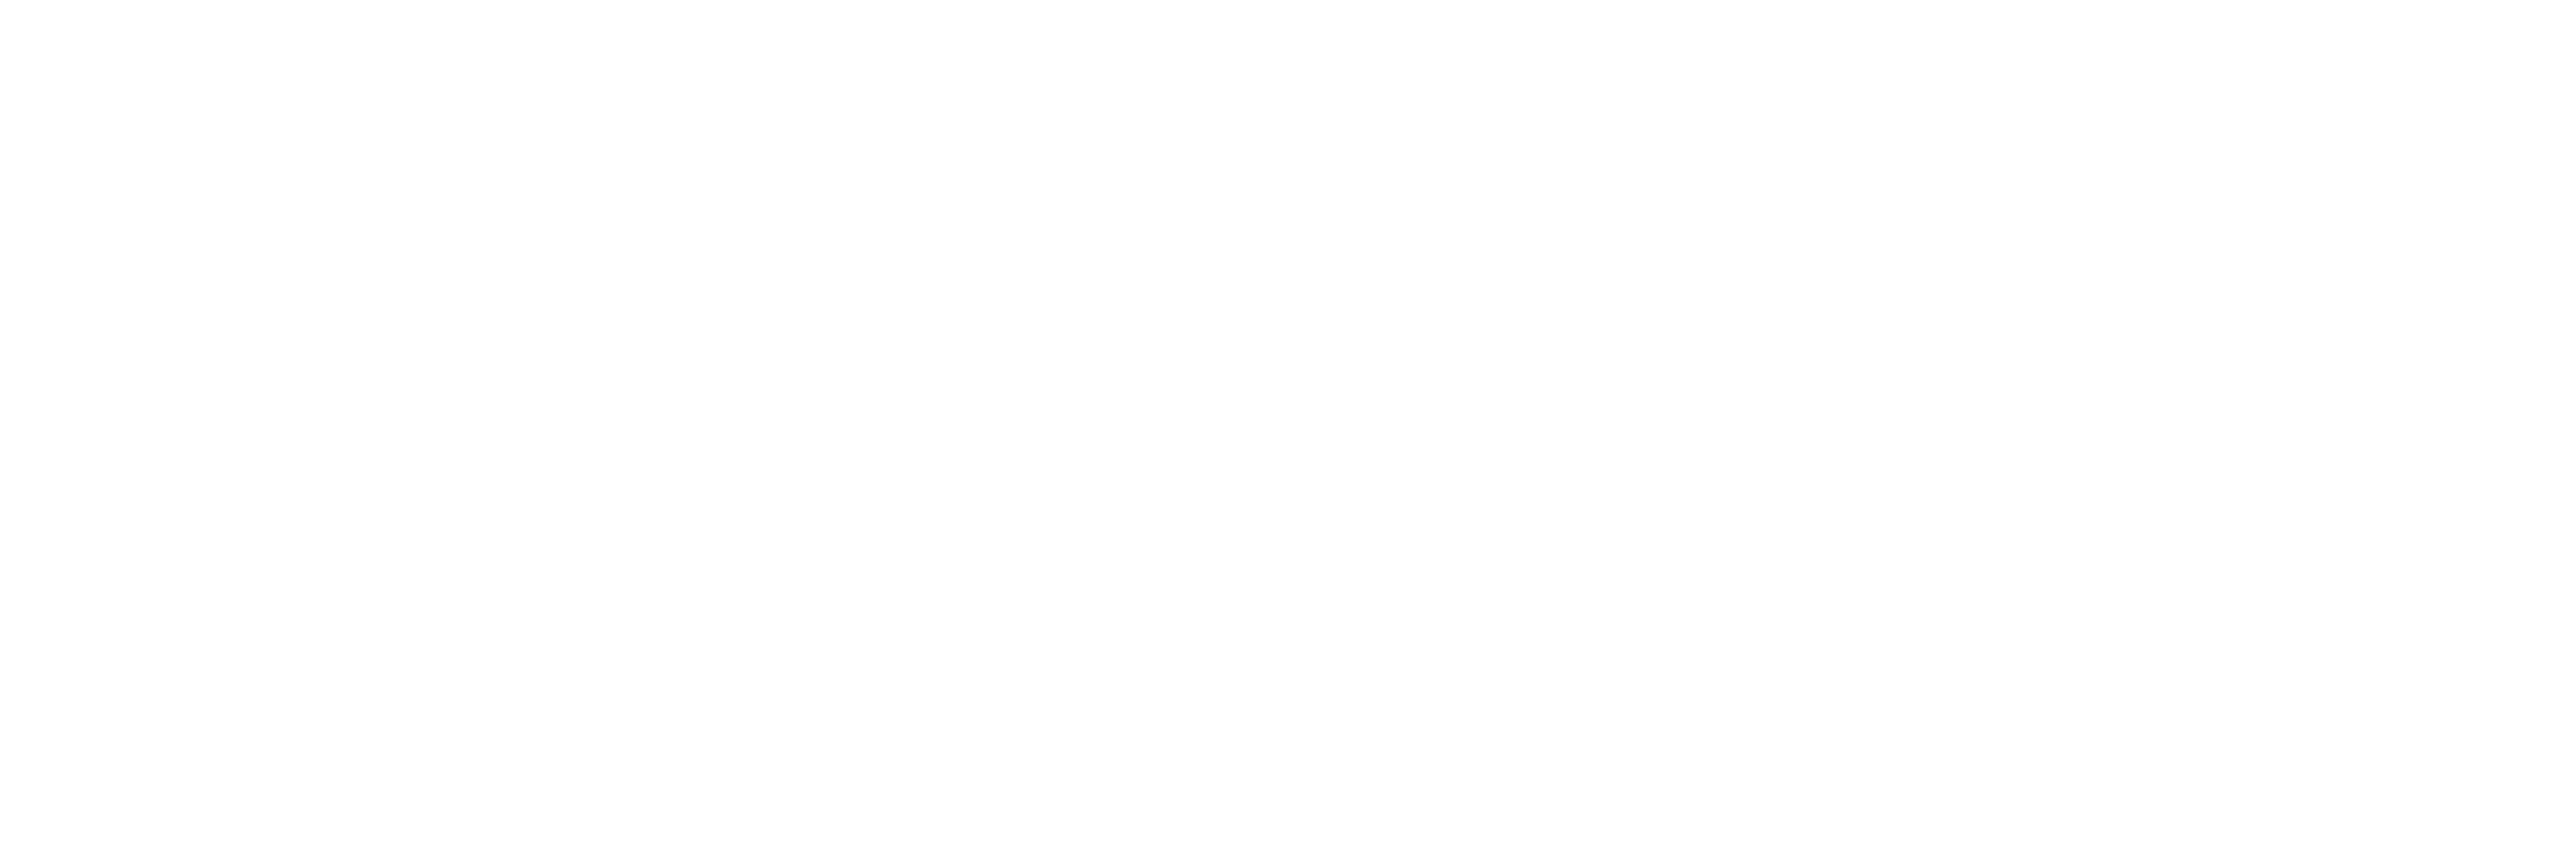 Dr. Thomas Ammelburger und Christina Bott